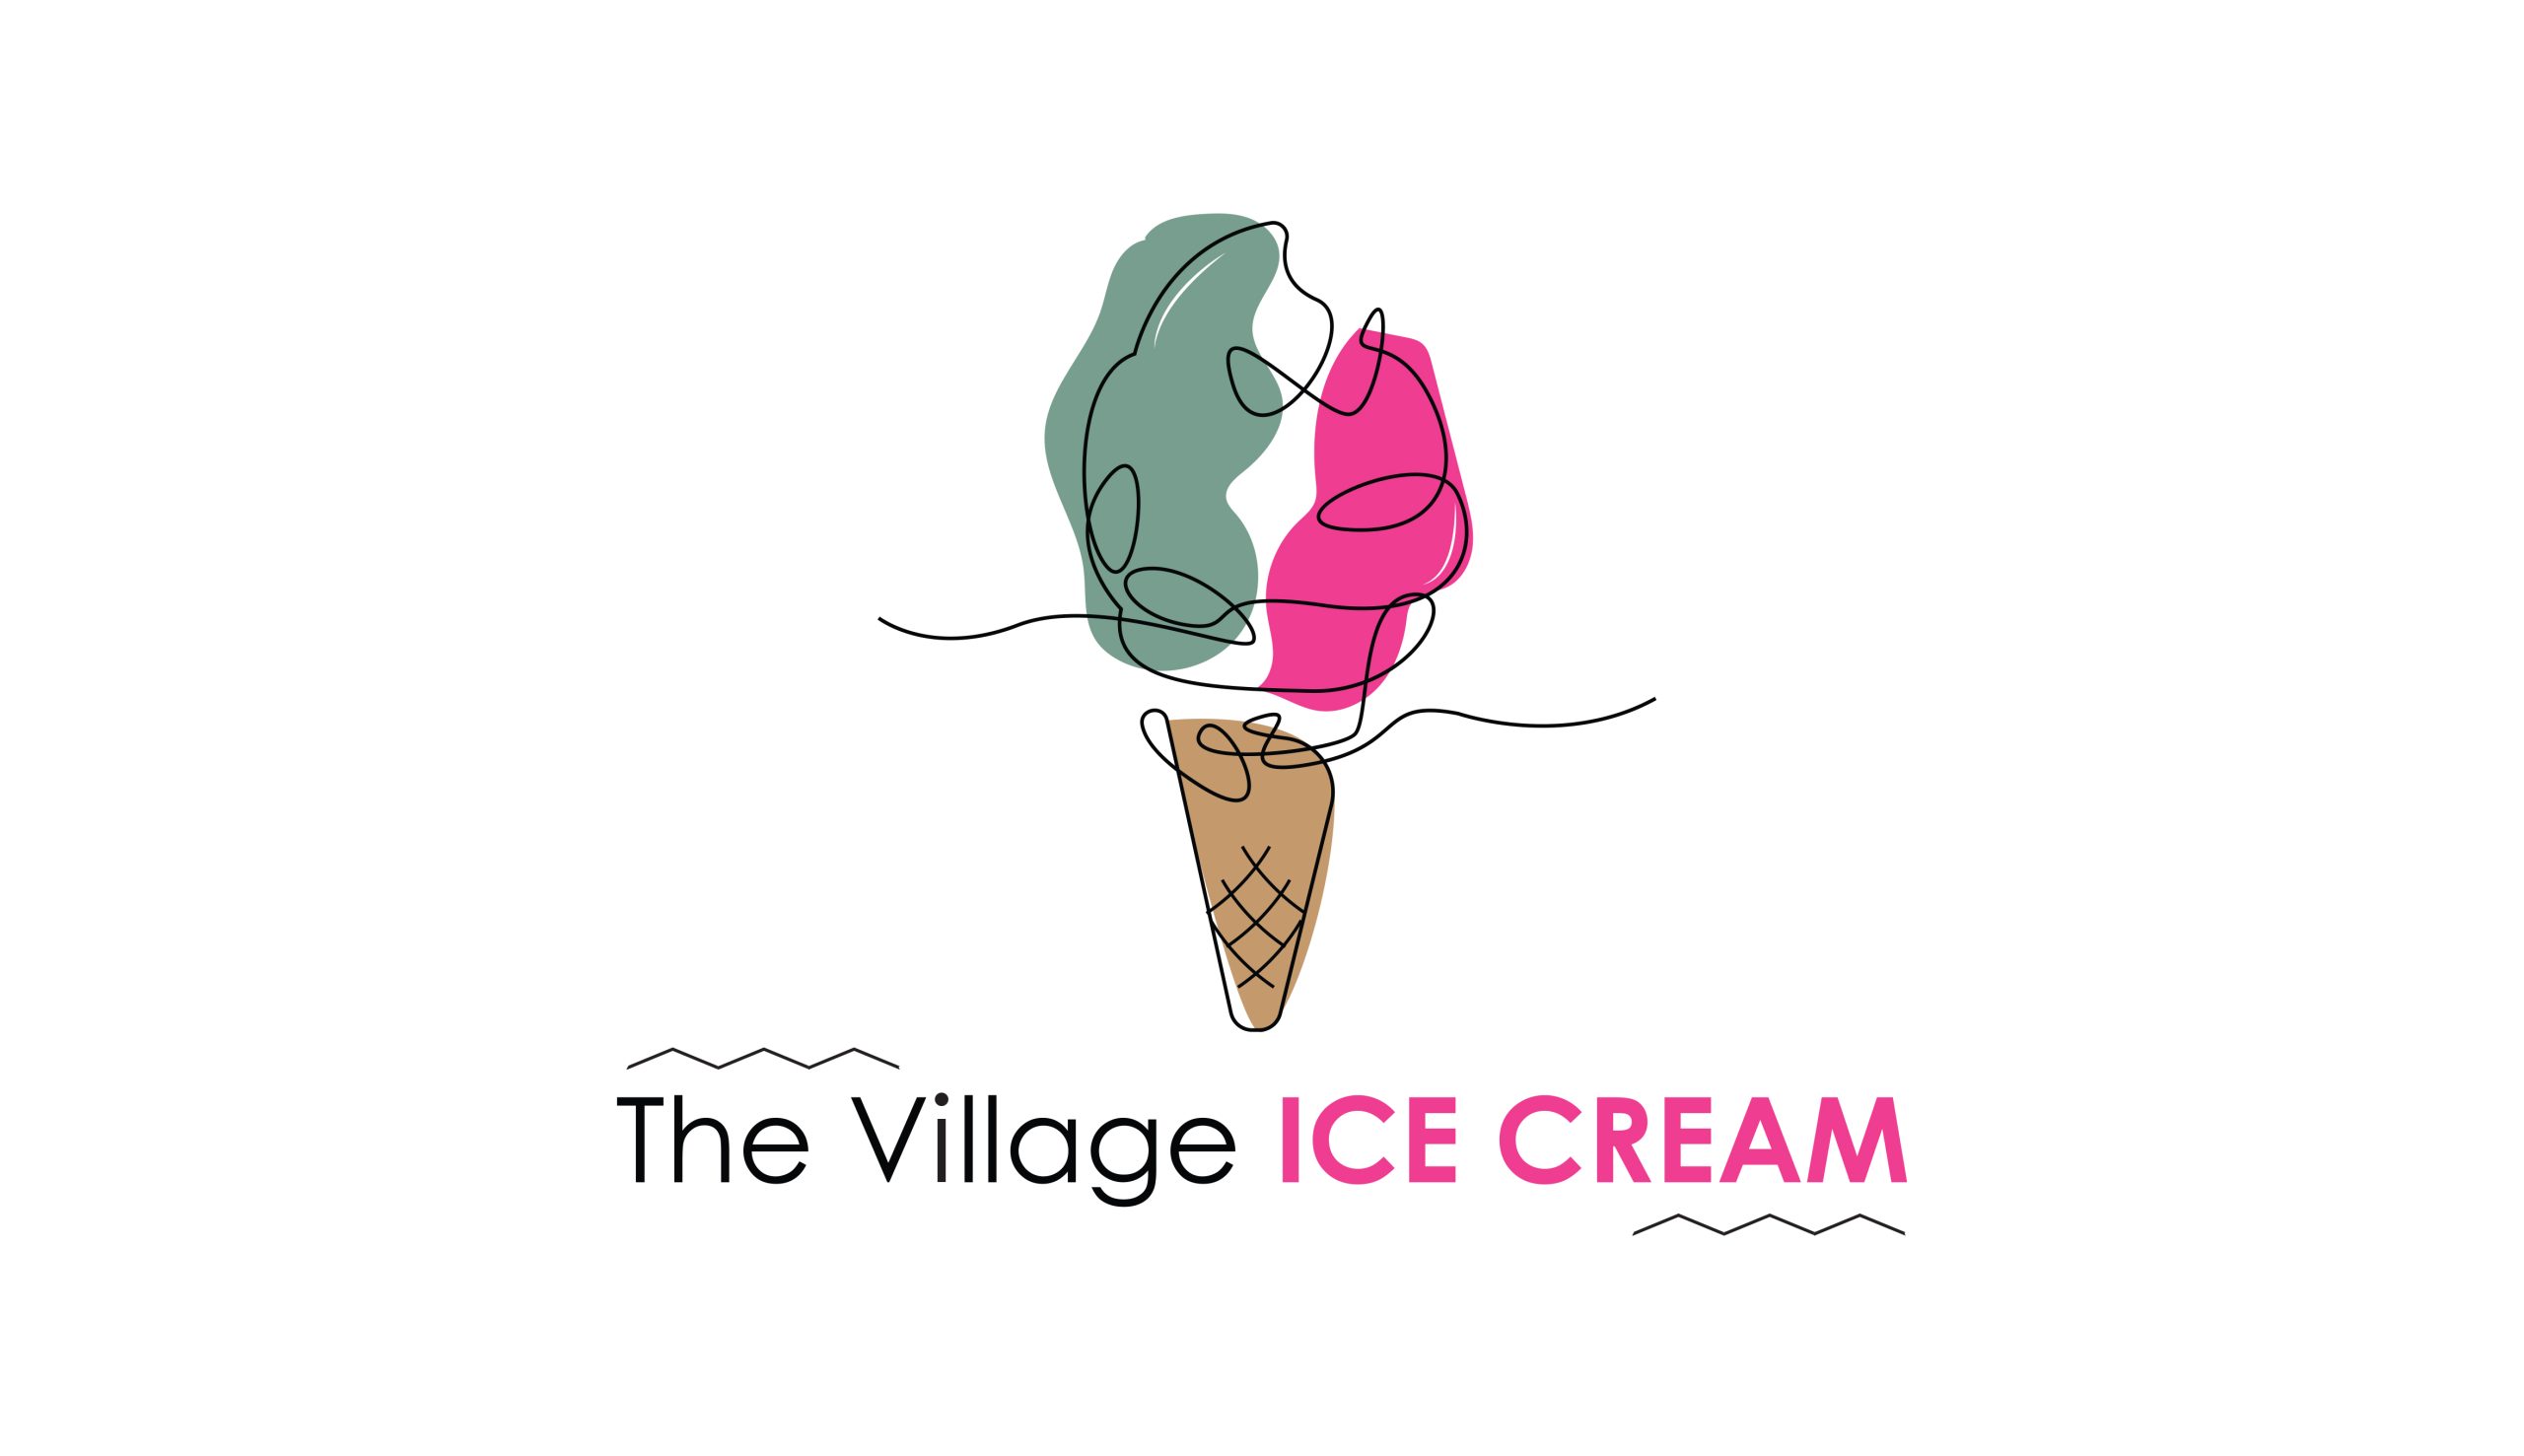 The Village Ice Cream